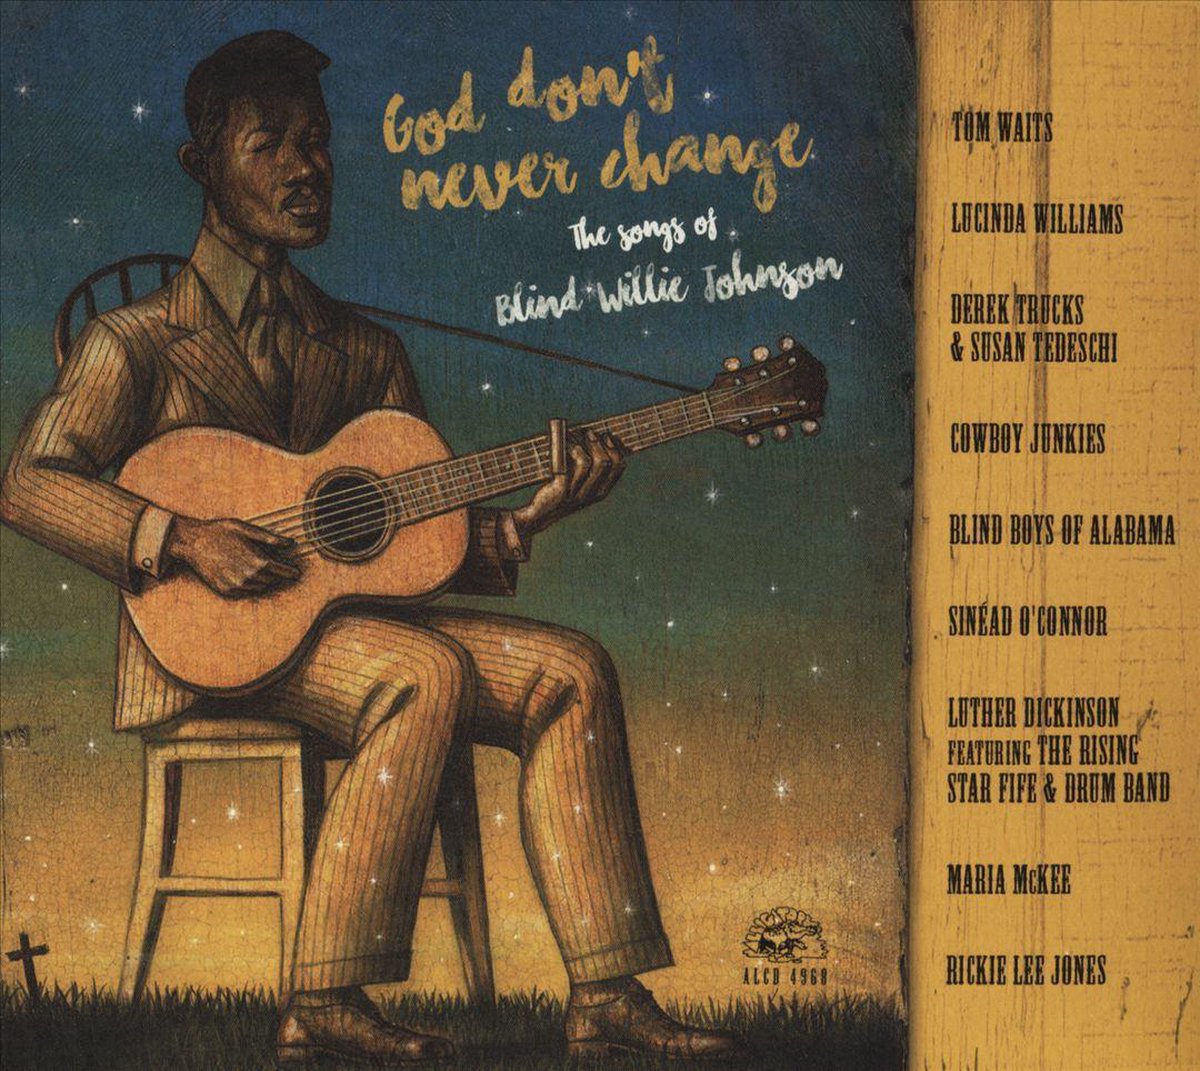 God DonT Never Change: The Songs Of Blind Willie Johnson - various artists